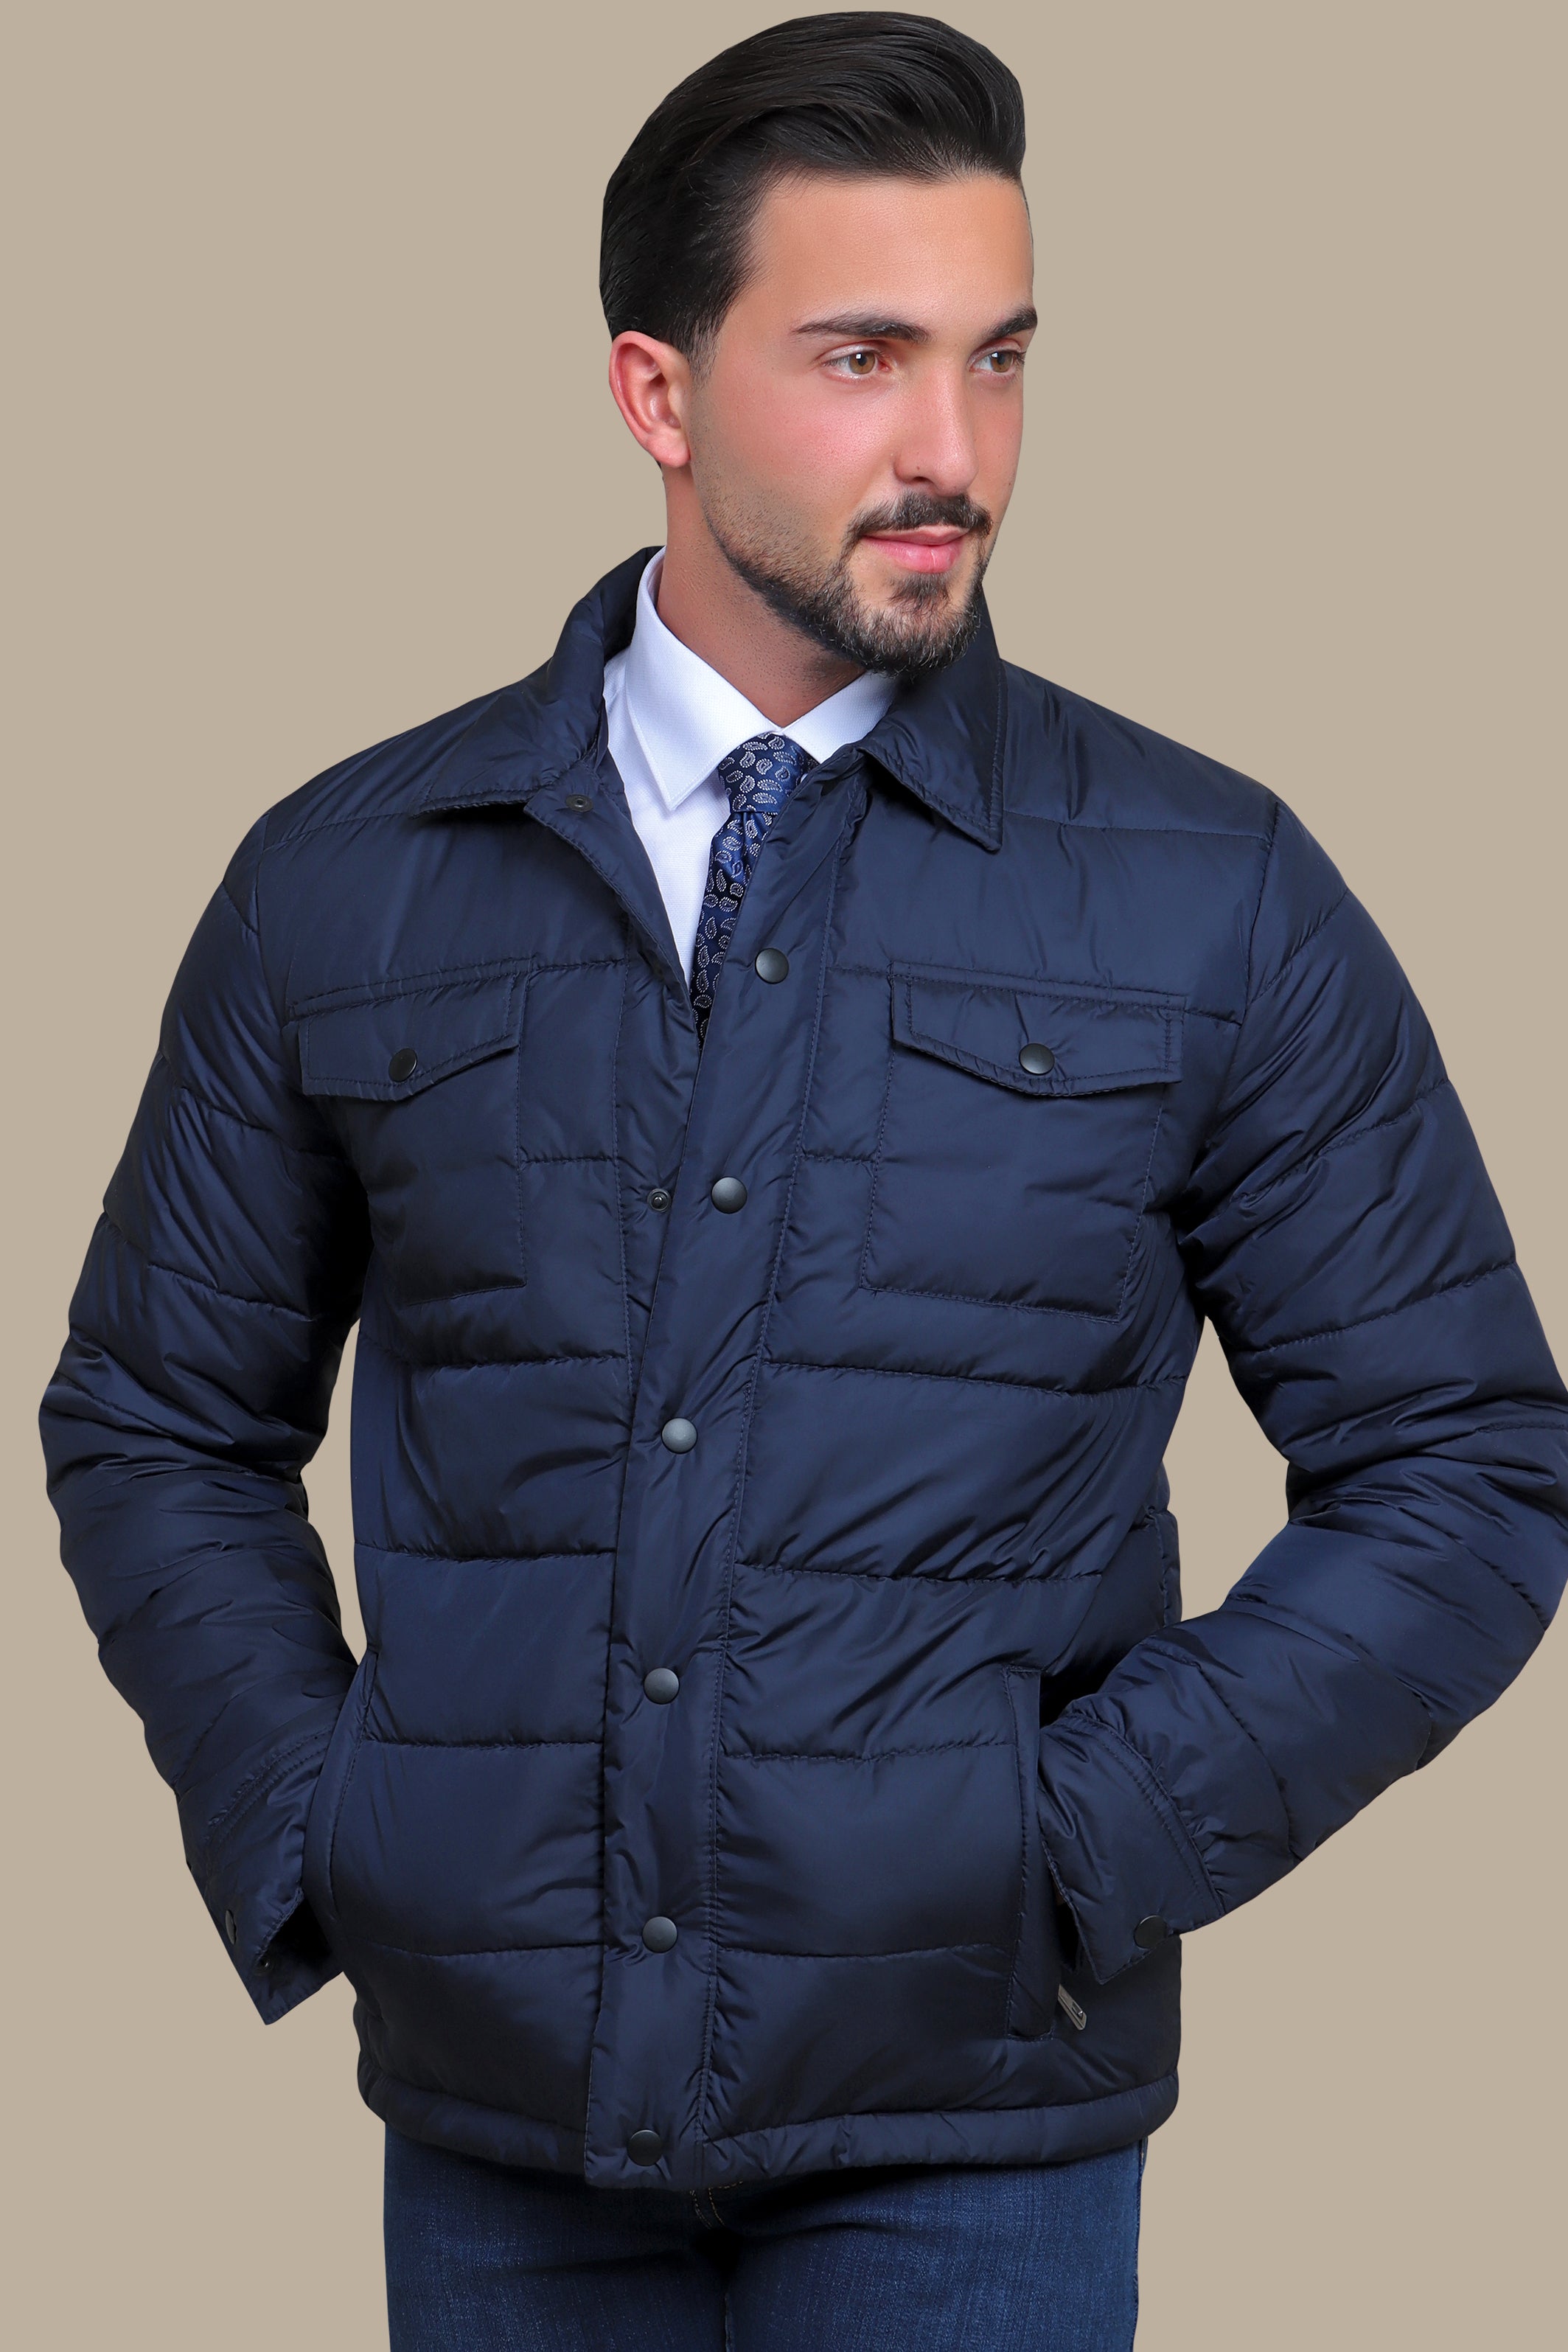 Navy Elegance: Lightweight Puffer Jacket for Effortless Style